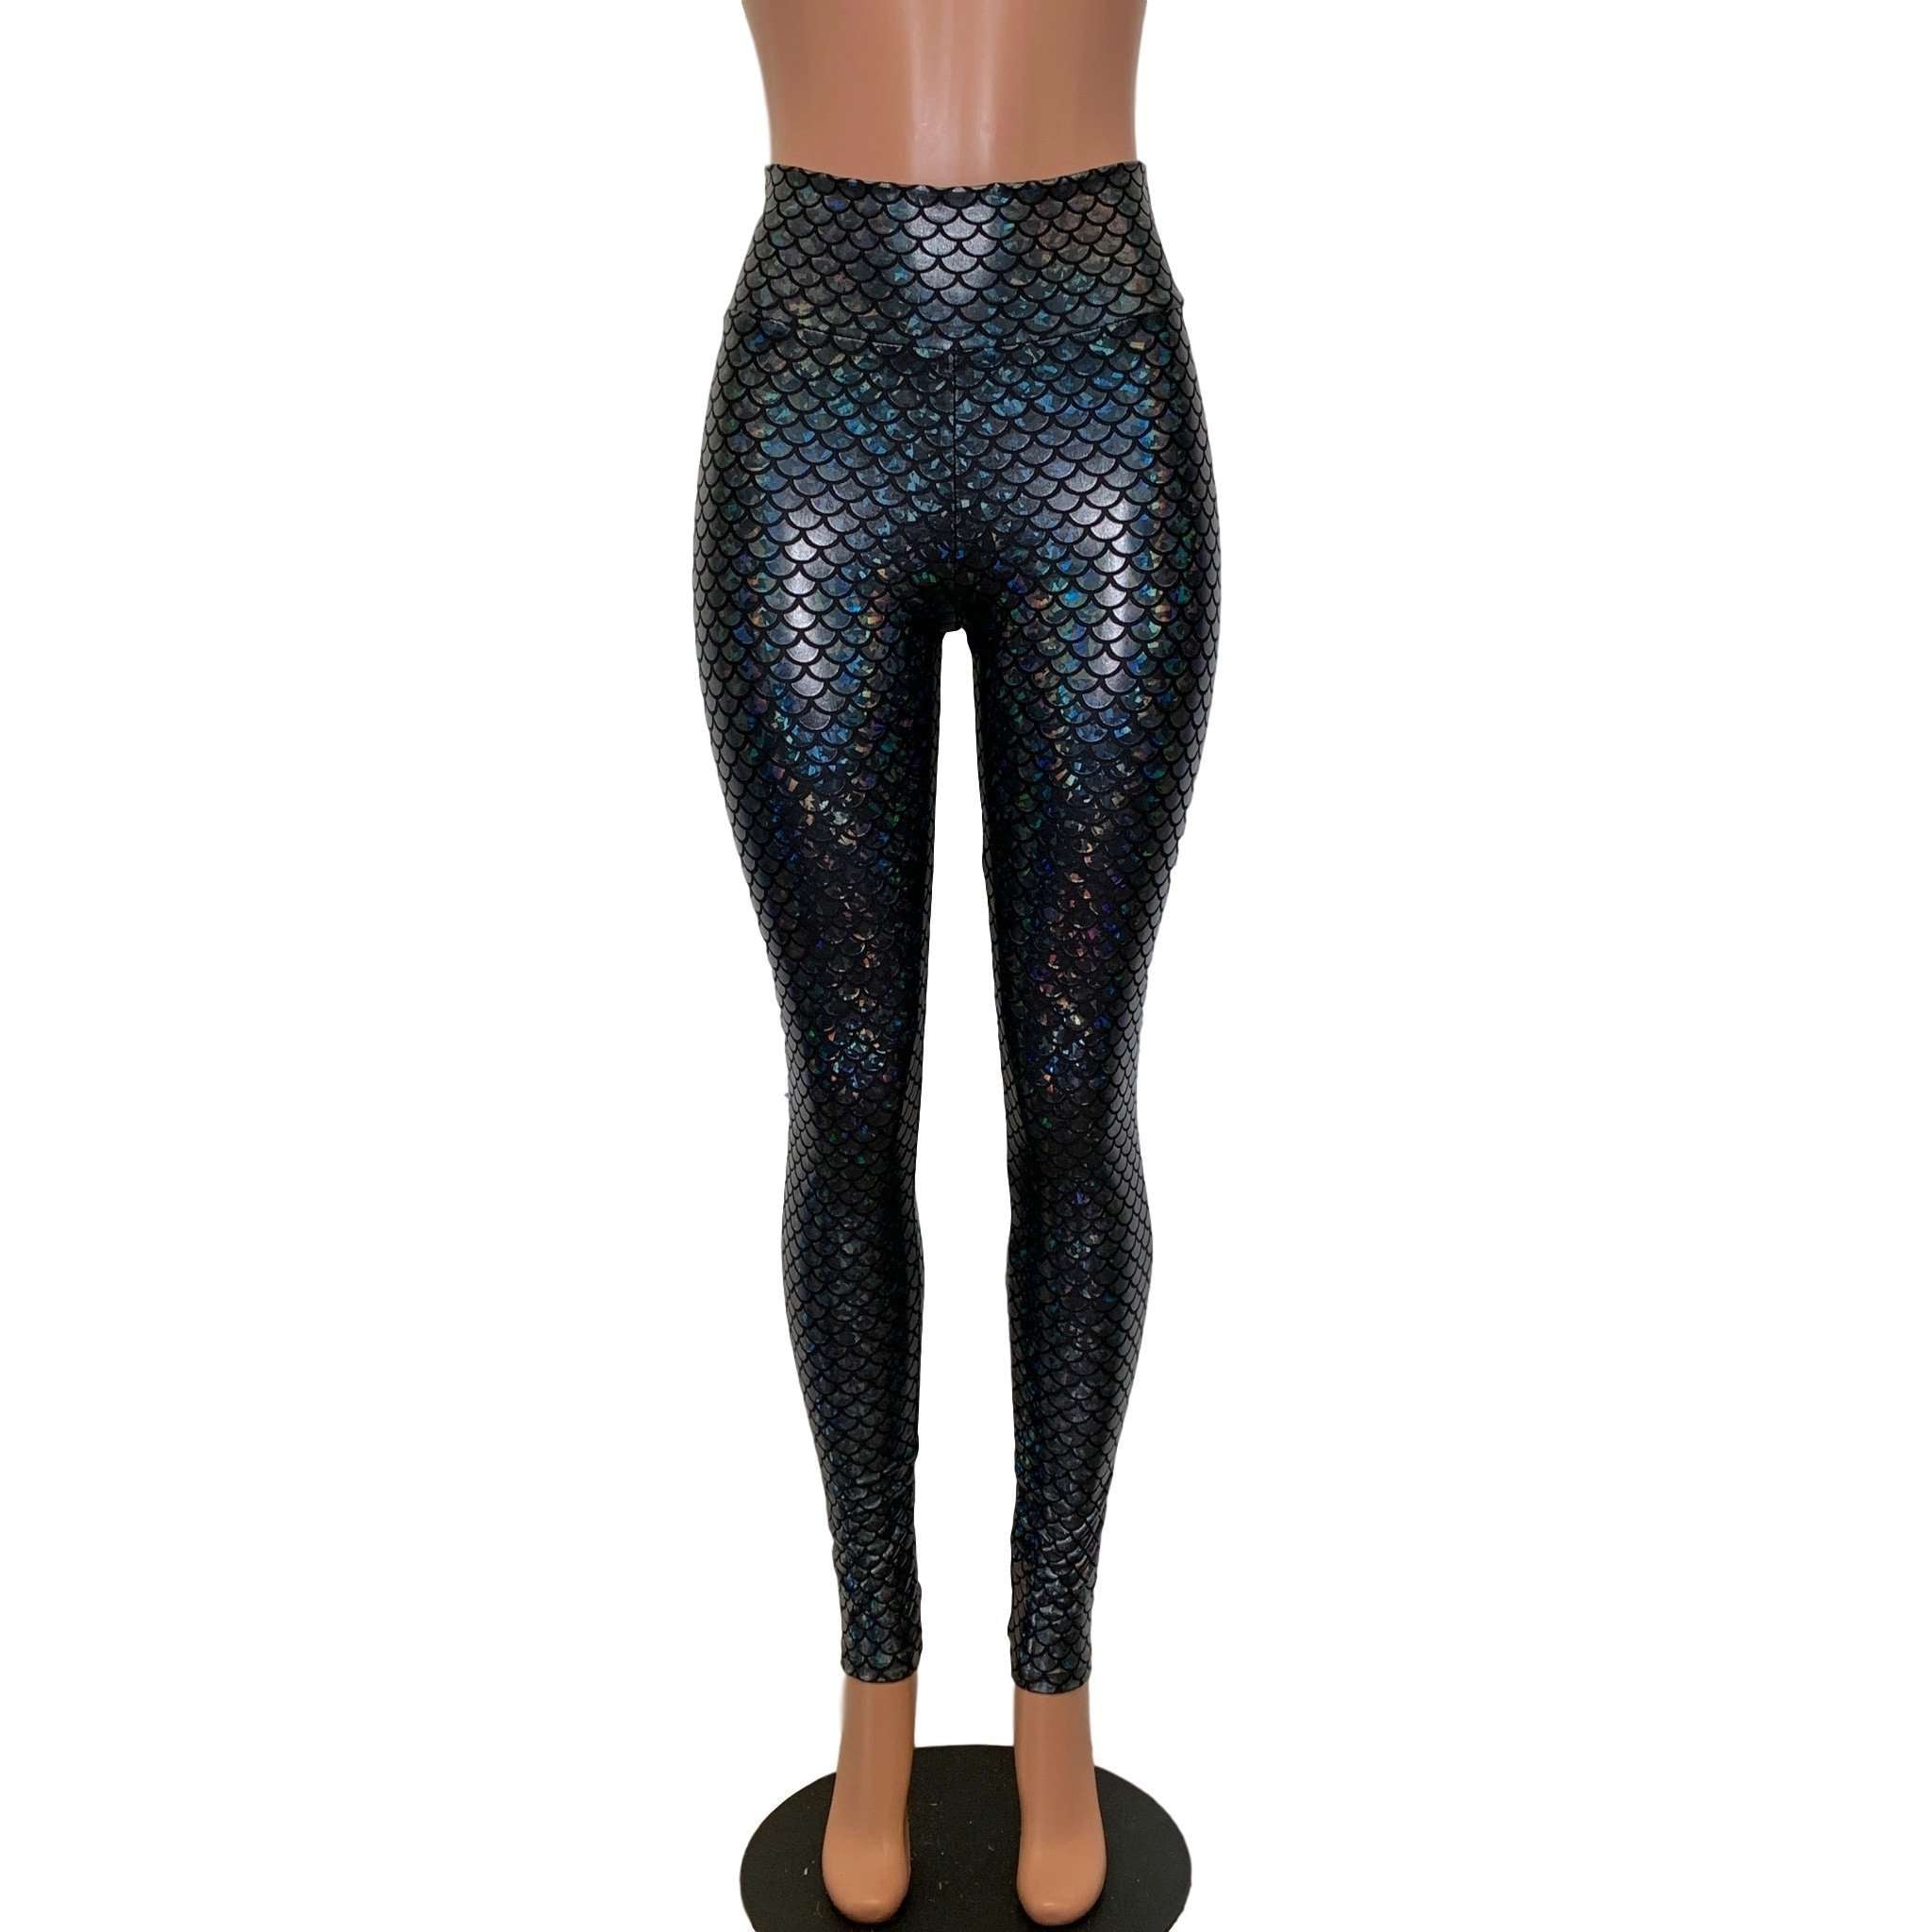 Mermaid Leggings - Black Holographic High Waist Pants